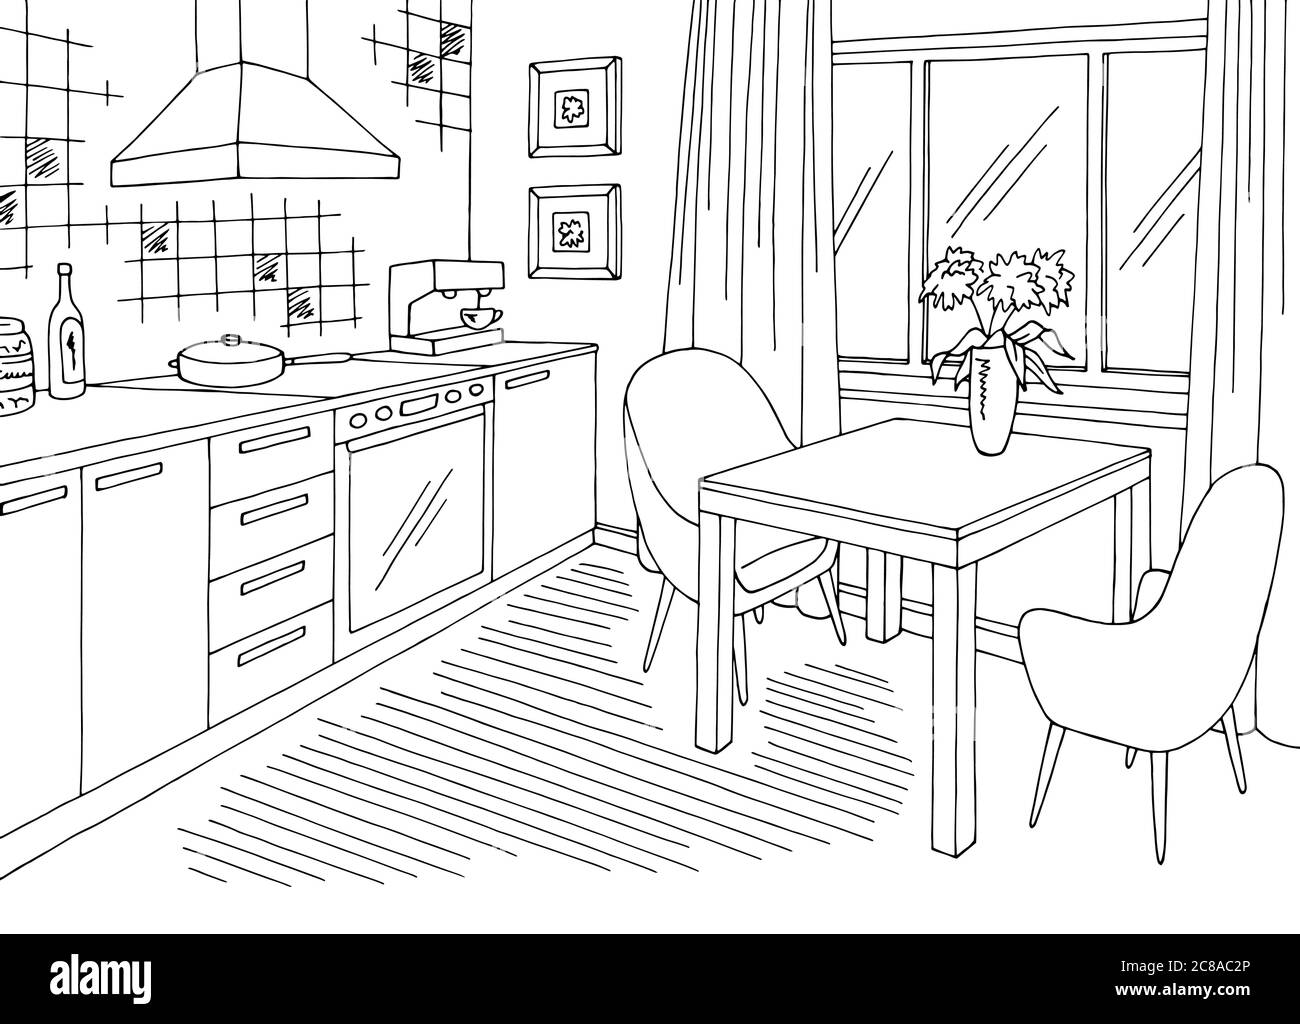 Kitchen room graphic black white home interior sketch illustration vector Stock Vector